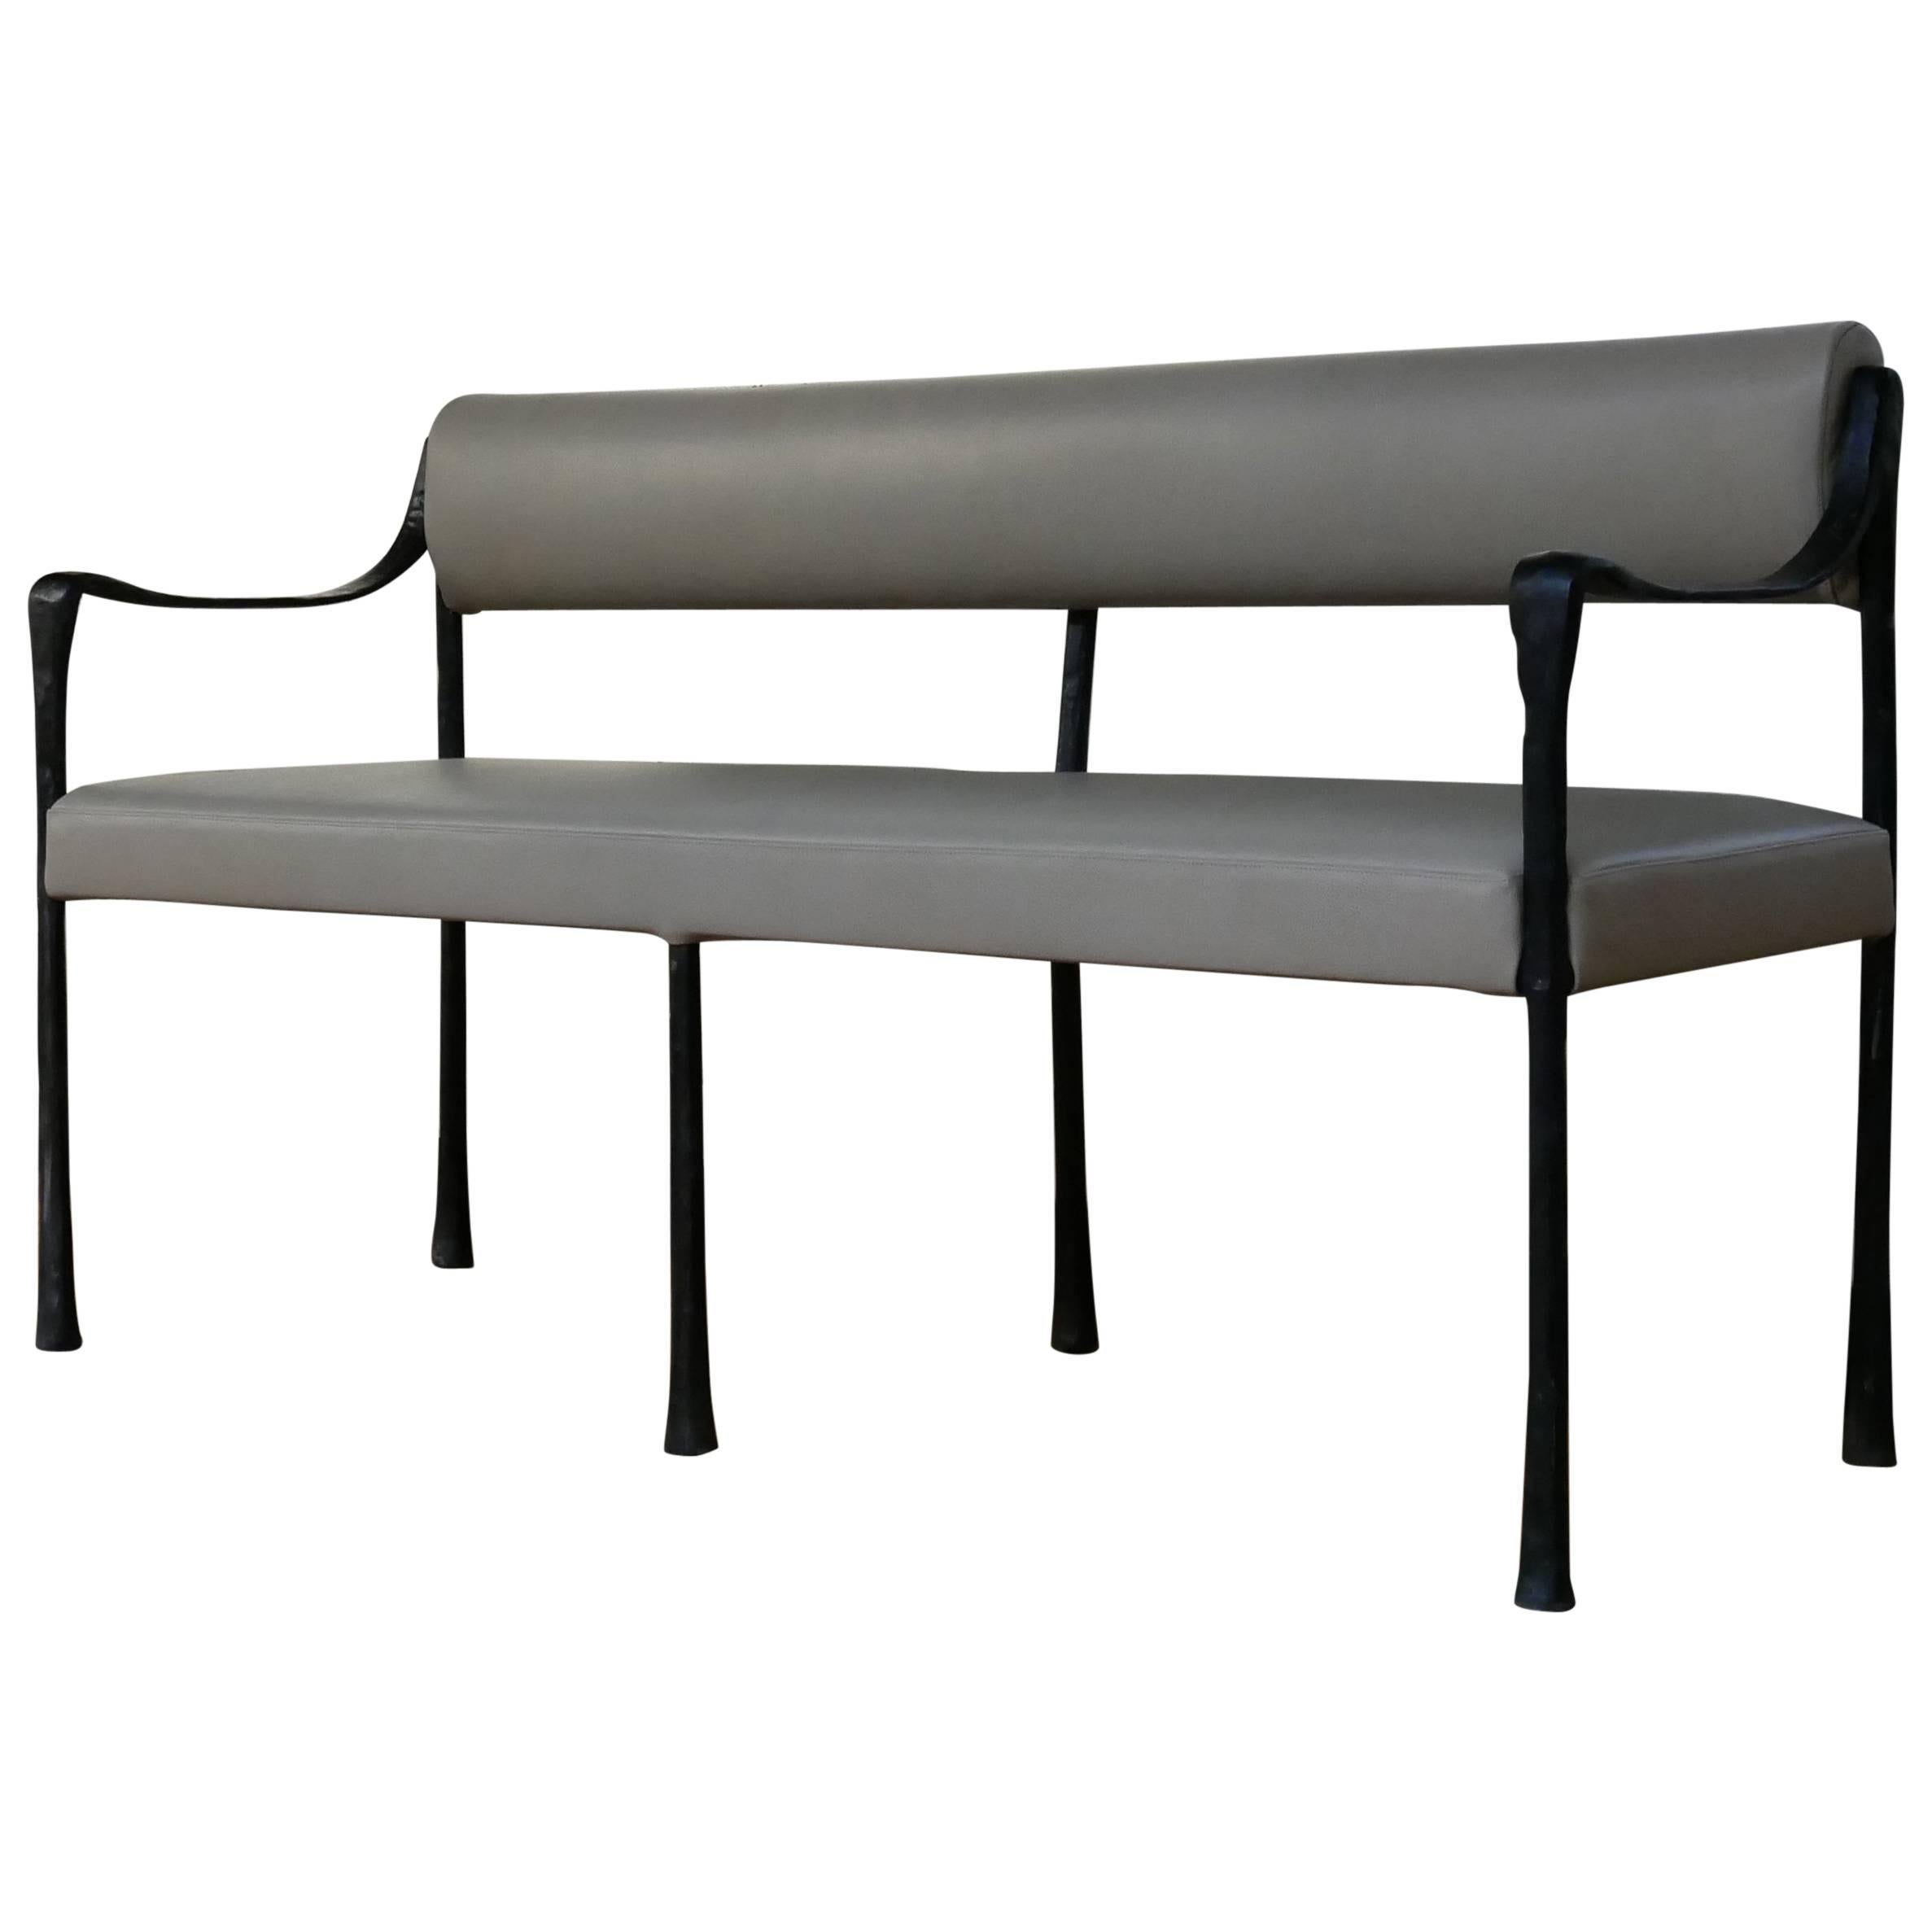 Giac Settee 60" Modern Seating w/ Contemporary Aluminum Frame Bench COM/COL For Sale